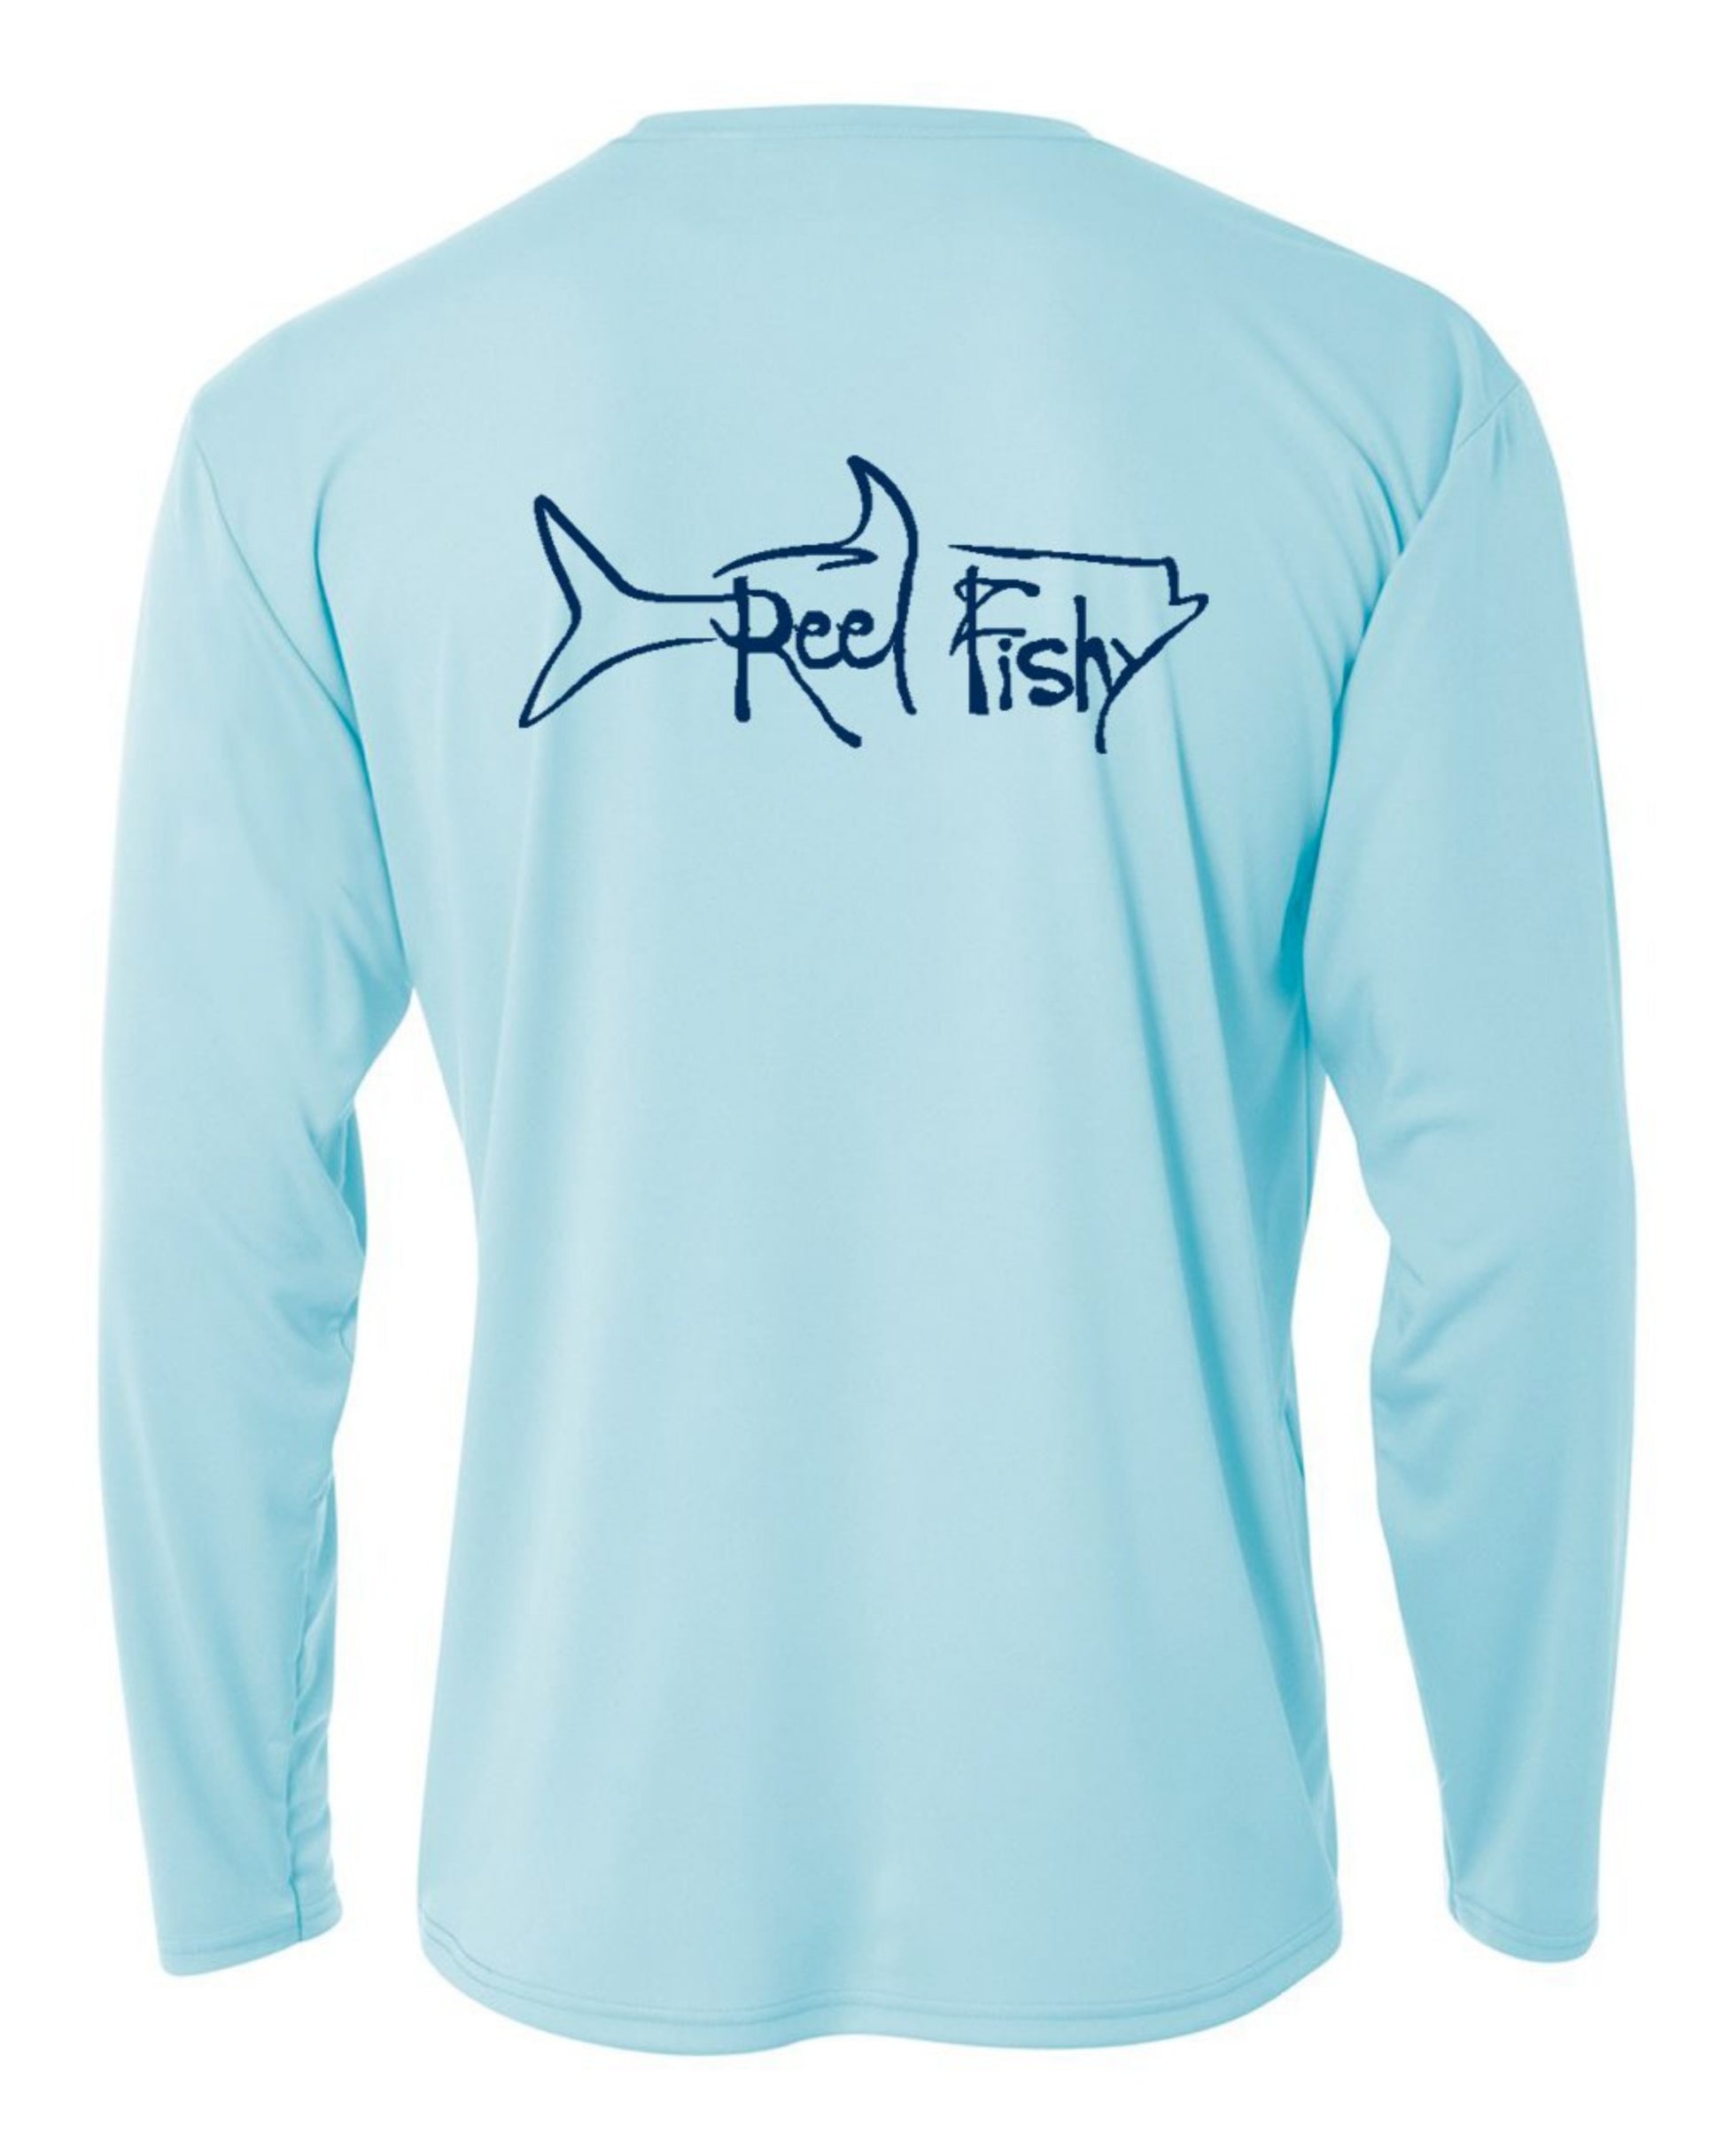 Reel Salty Fishing Team Shirts - Performance Shirt - Fishing Shirt